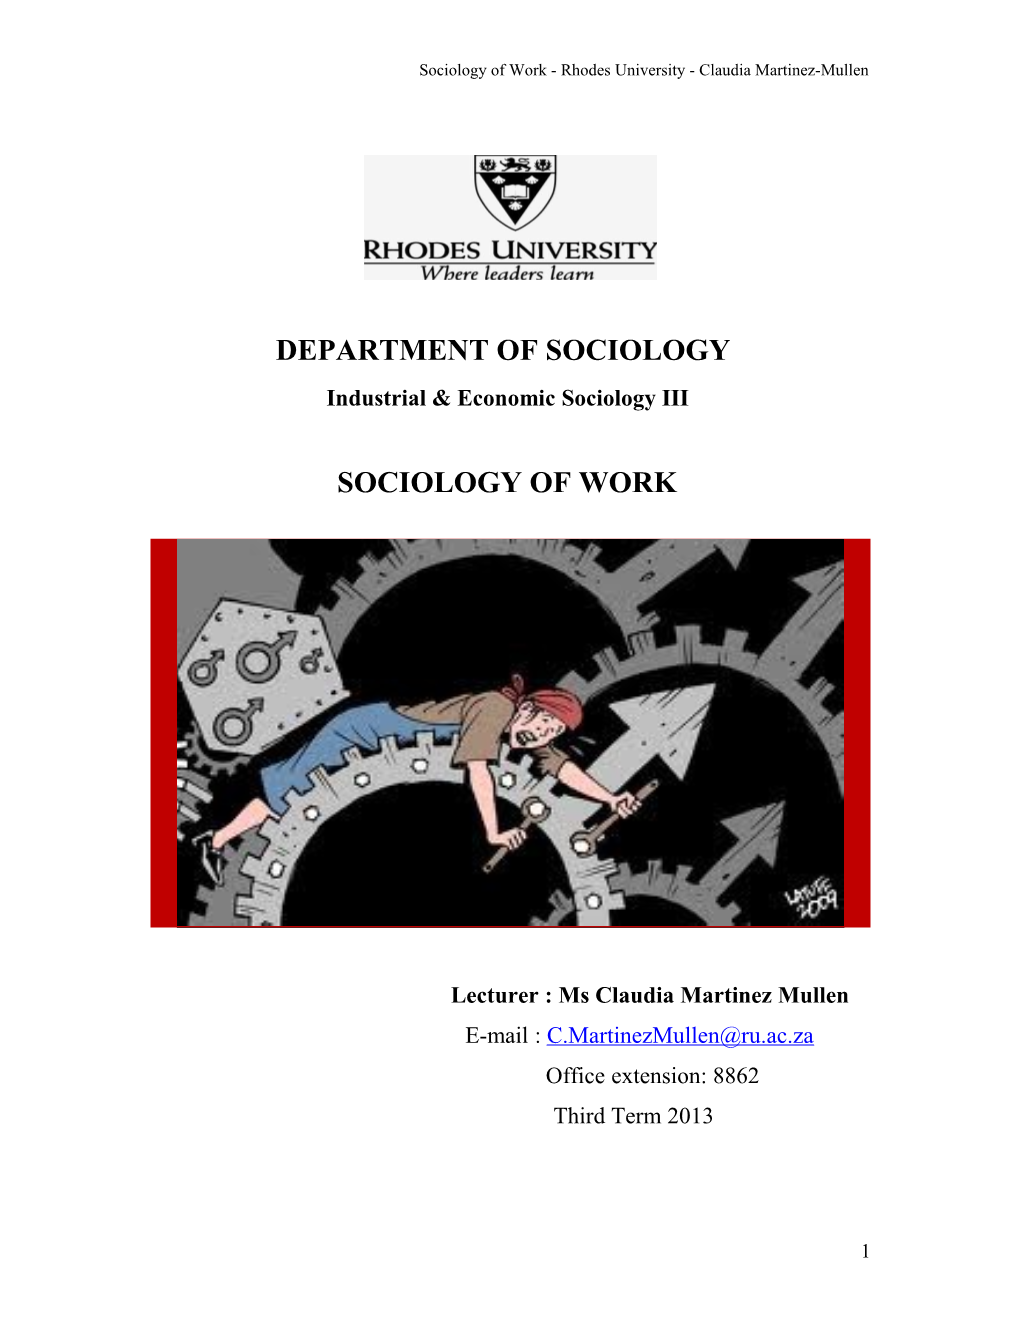 Industrial & Economic Sociology III